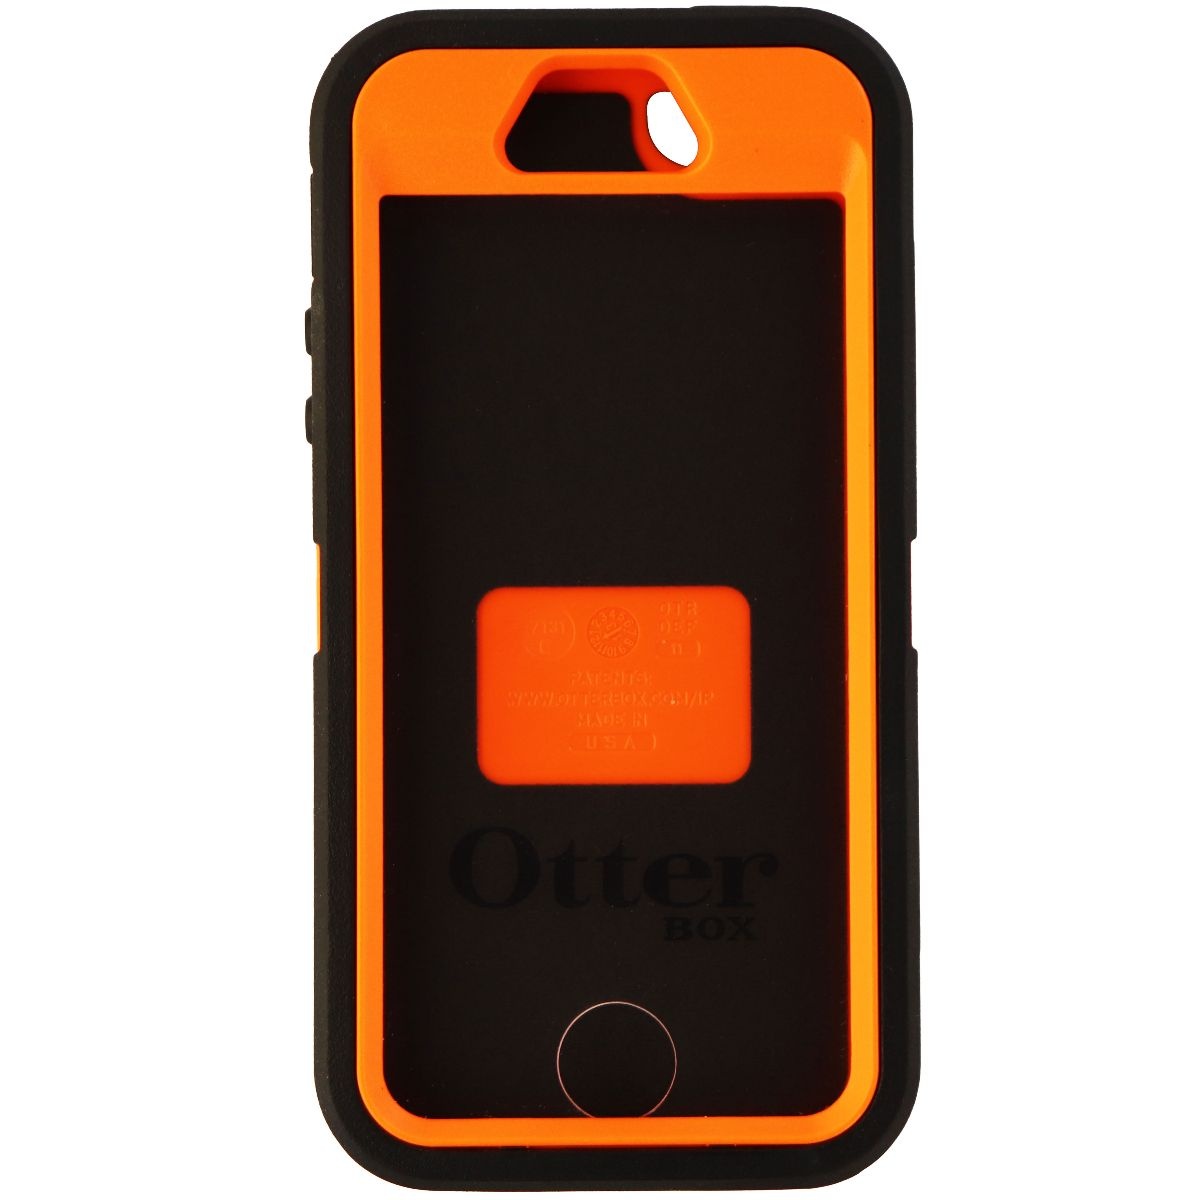 OtterBox Defender Case for iPhone SE 5 5S Realtree Max 4 Orange * OEM Original - image 4 of 8